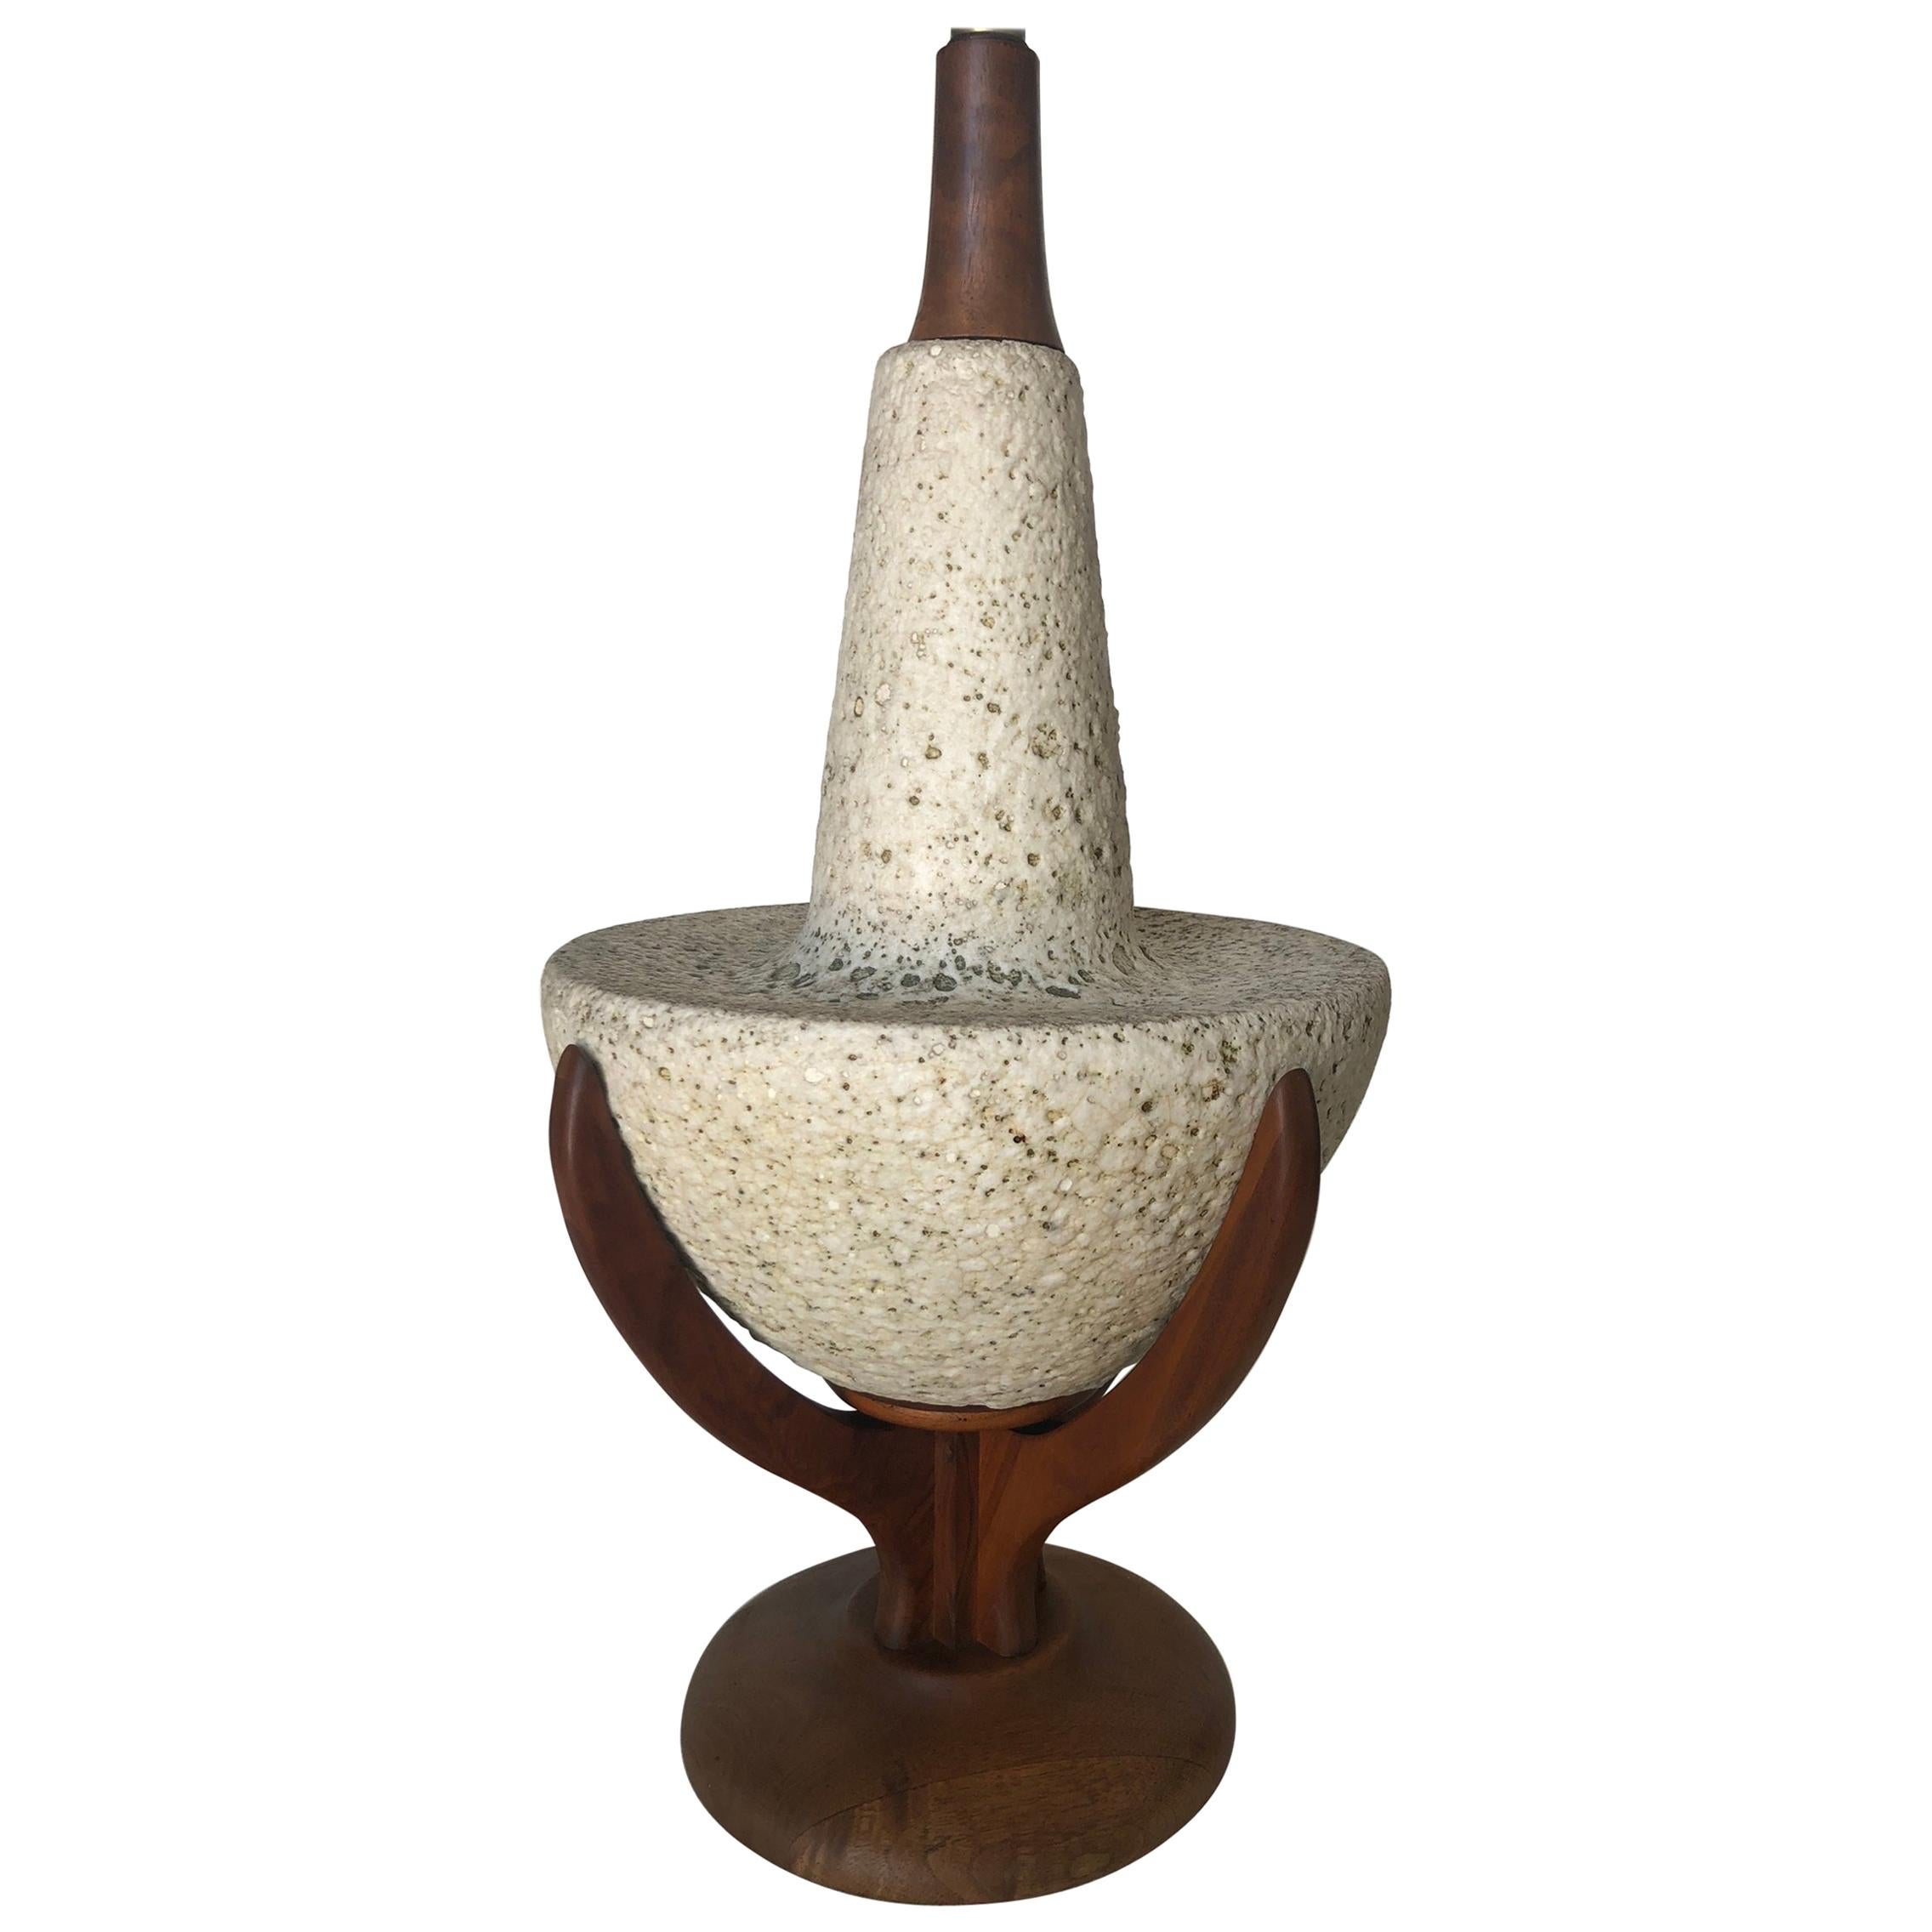 Atomic Age Pebble Stone and Teak Table Lamp